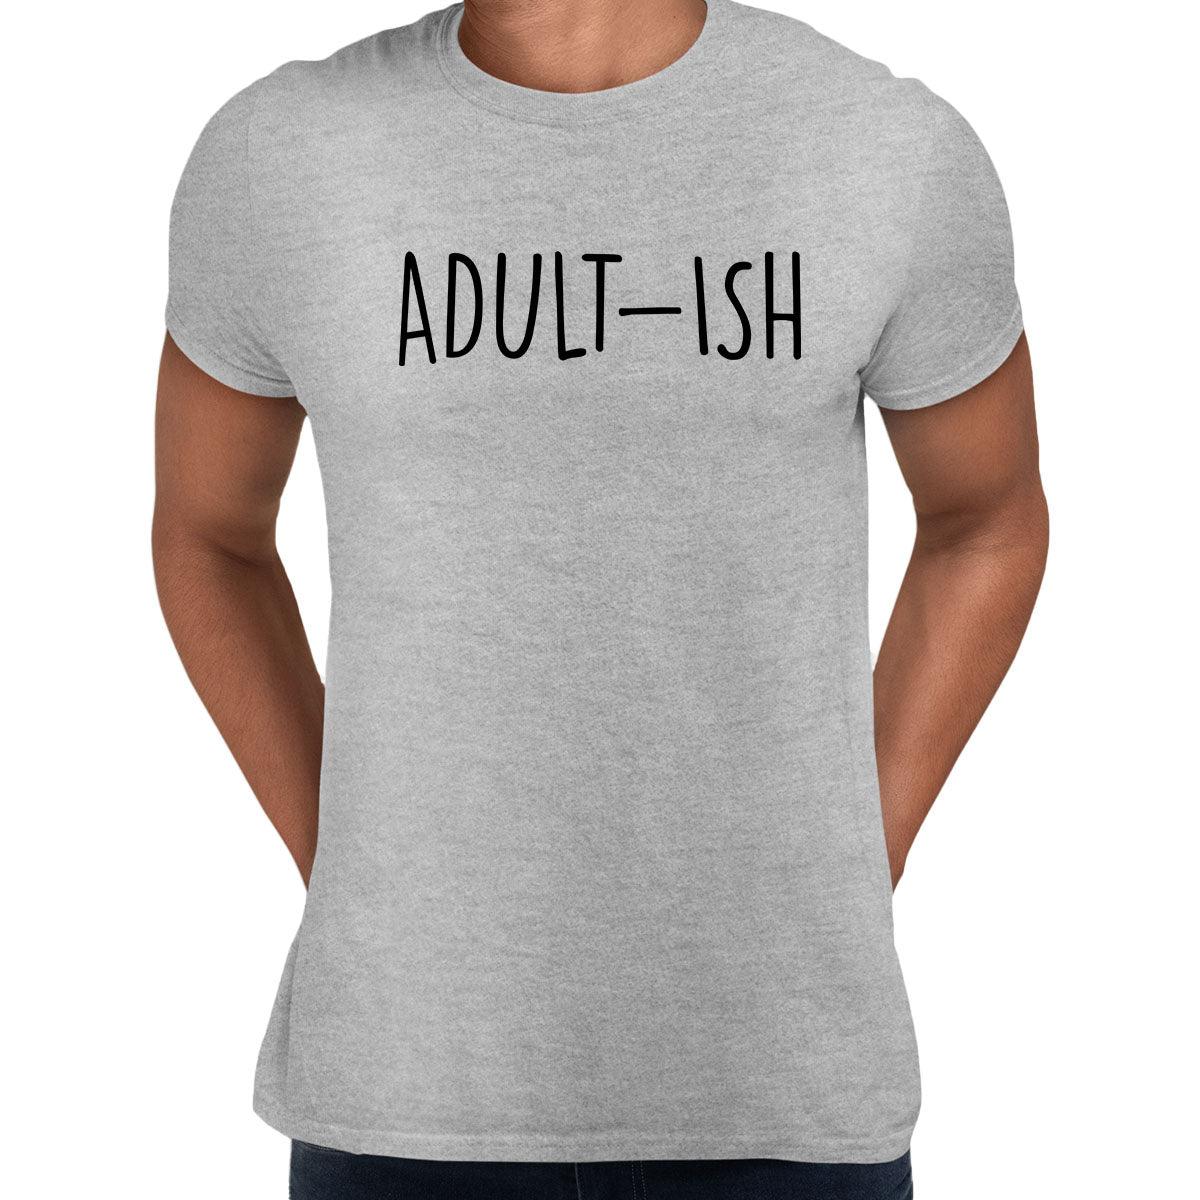 Adult-ish Mens Funny T-Shirt Novelty Joke T-Shirt Rude Gift Him Dad Birthday Slogan Unisex T-Shirt - Kuzi Tees